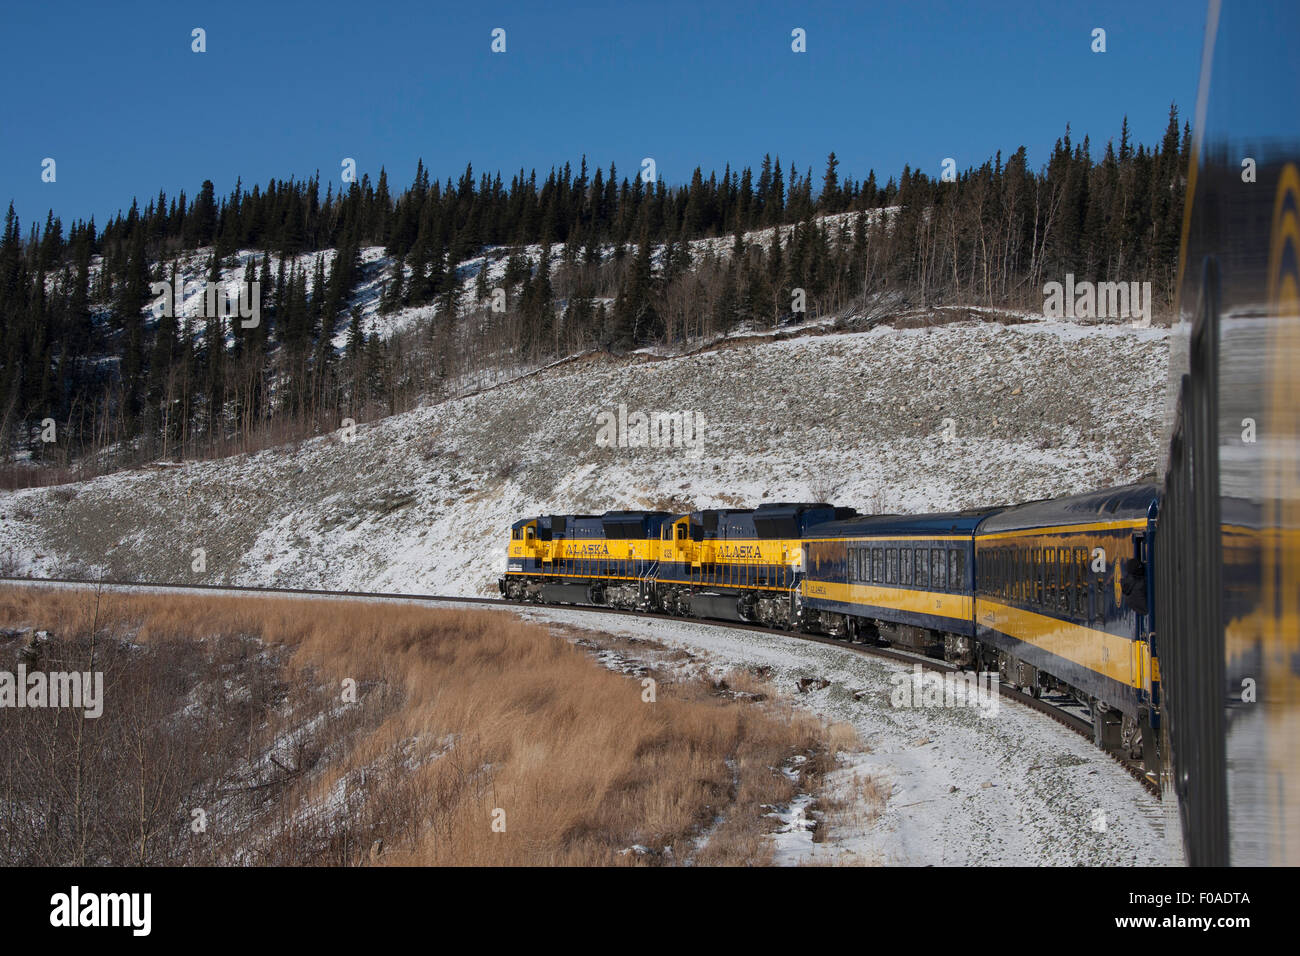 View from train, Fairbanks, Alaska Stock Photo